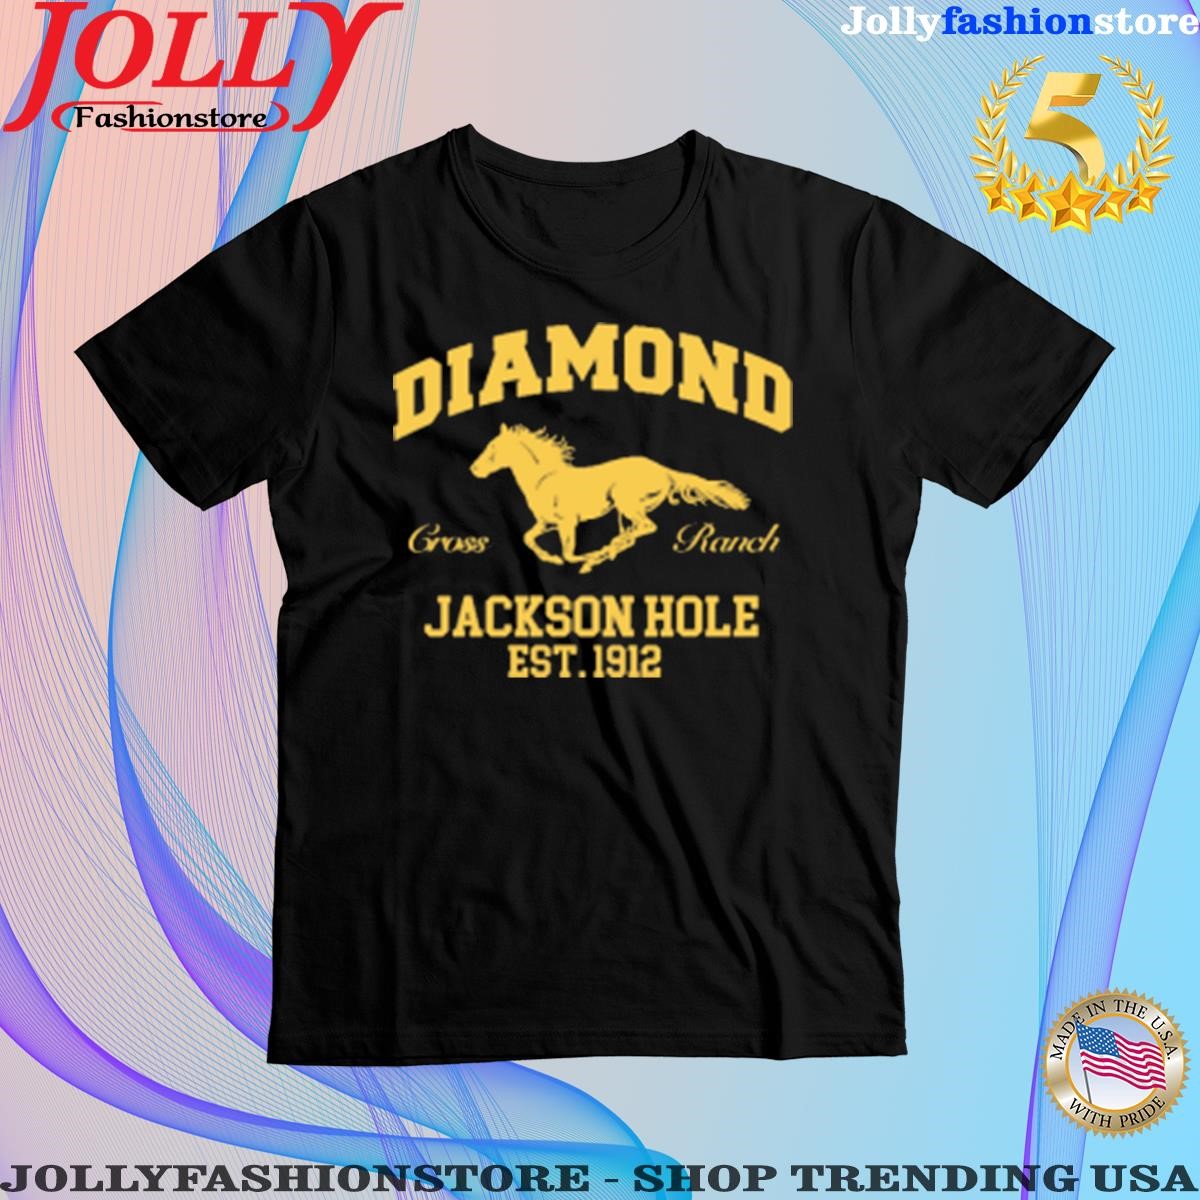 Diamond cross ranch jackson hole shirt